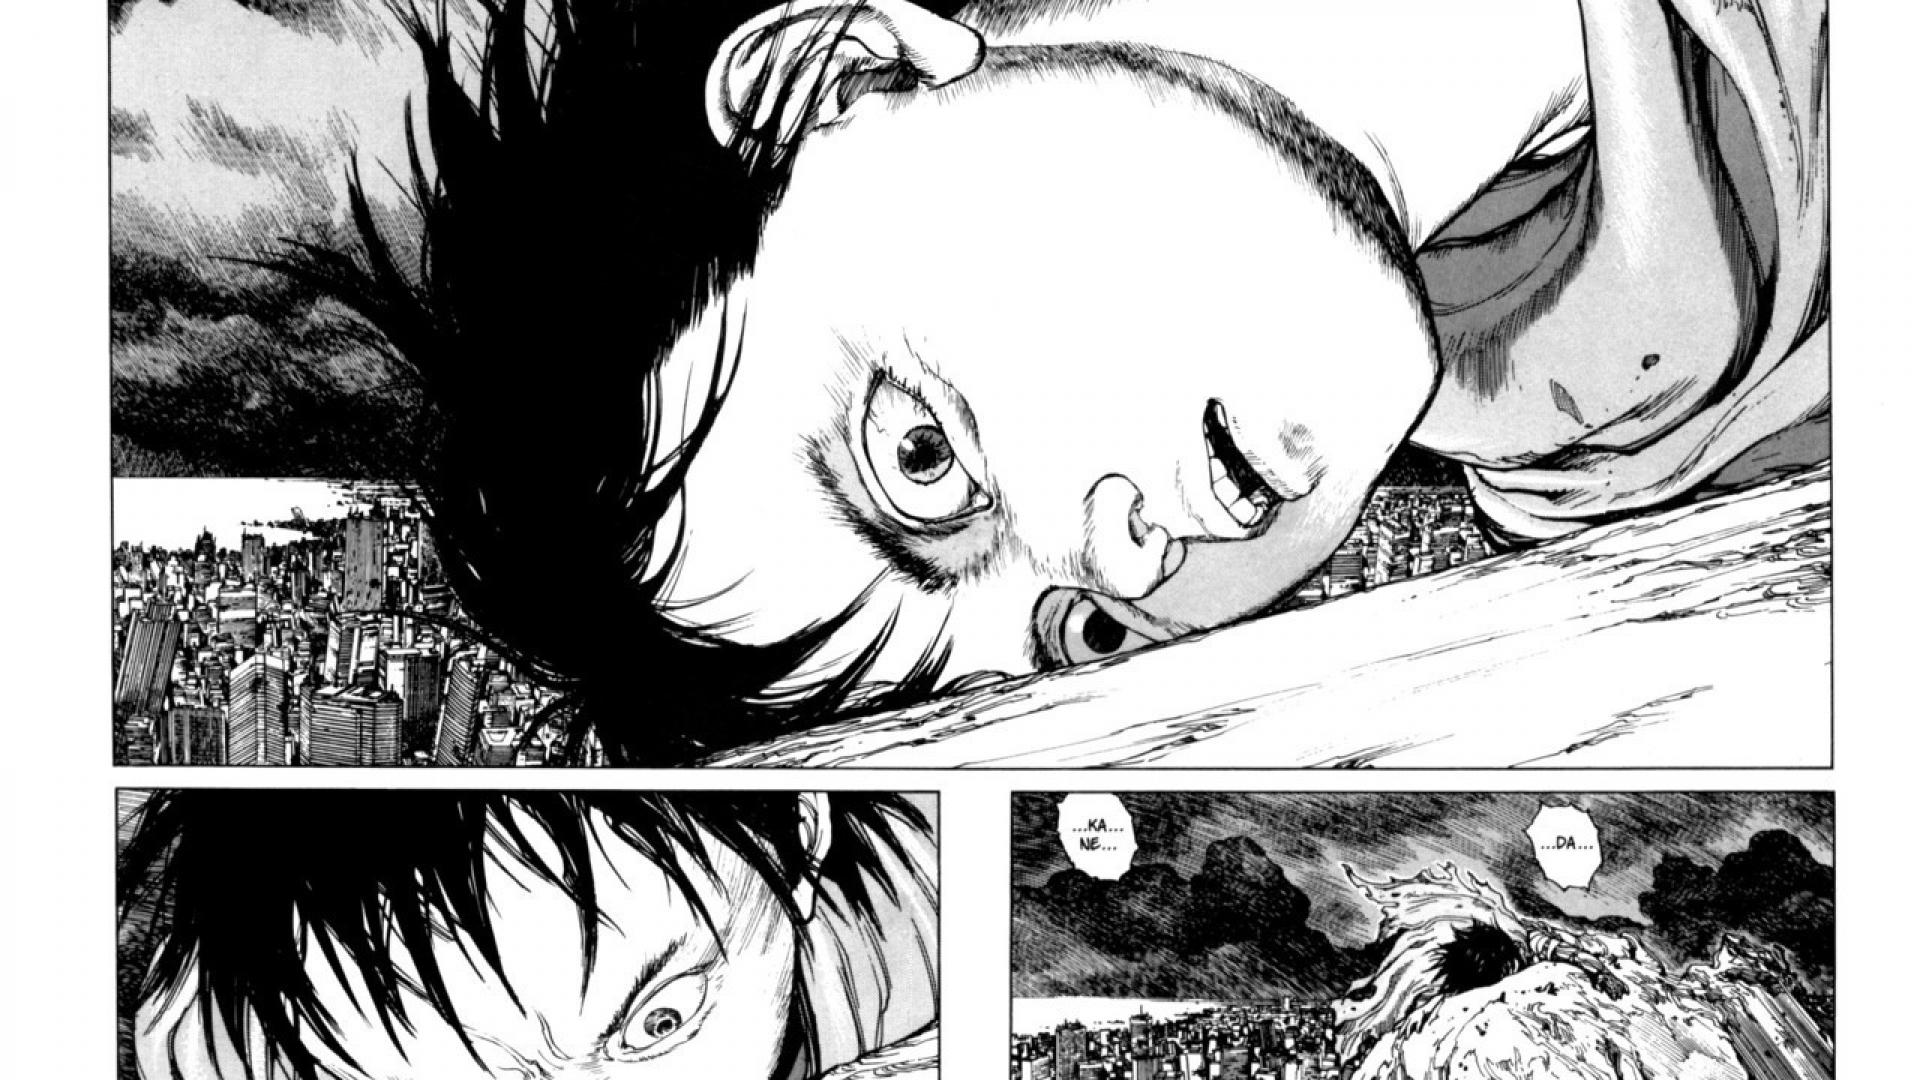 manga hd wallpapers,cartoon,black and white,anime,monochrome,illustration